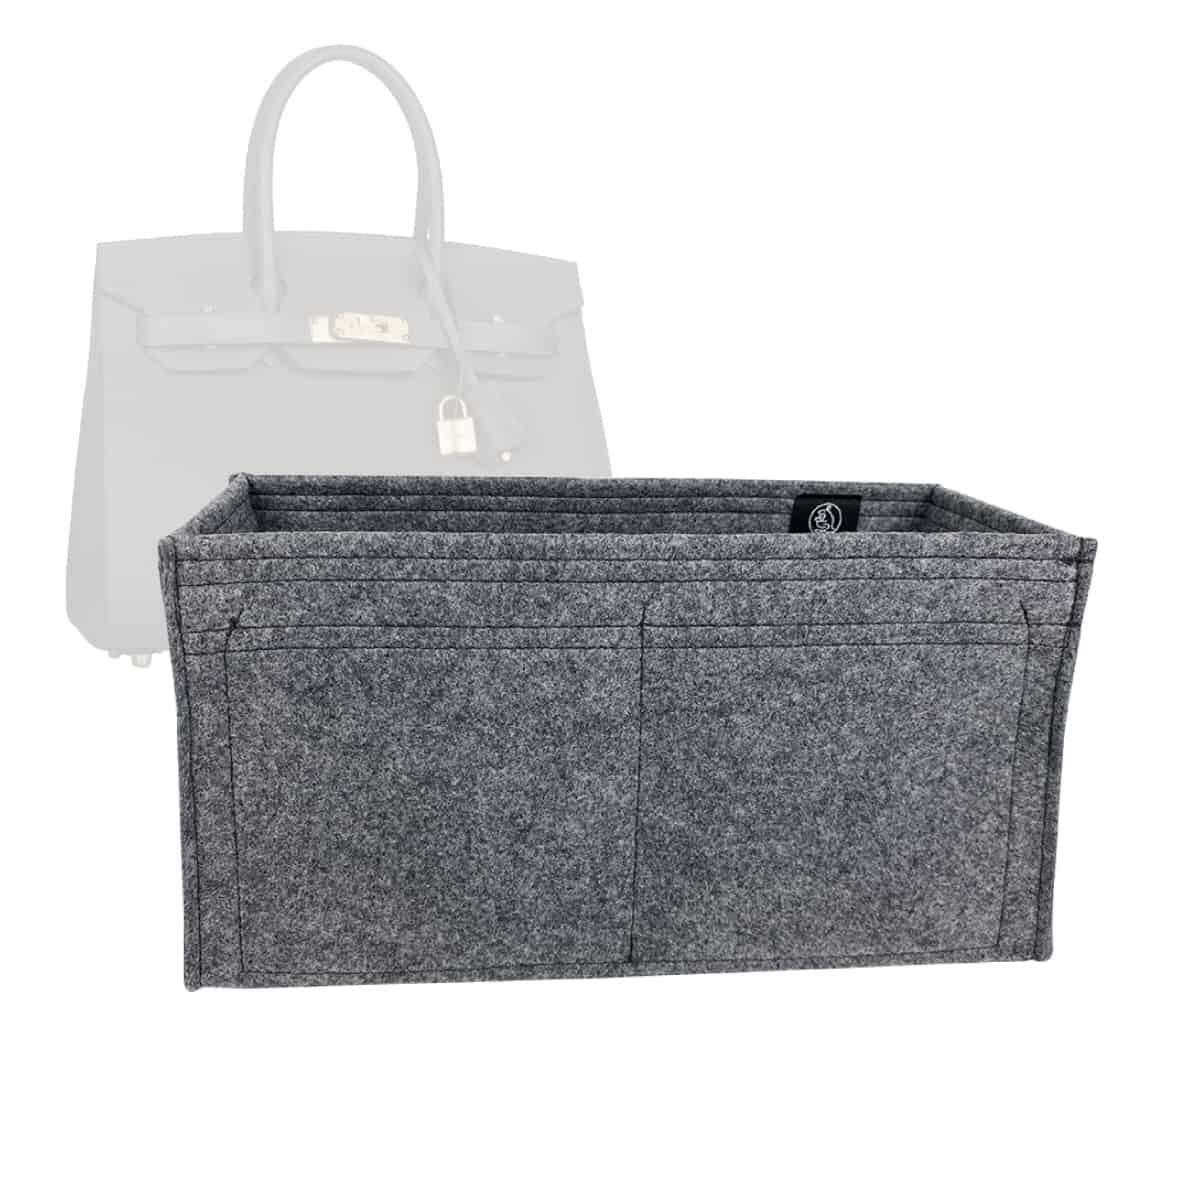  Zoomoni Premium Bag Organizer for Hermes Birkin 40